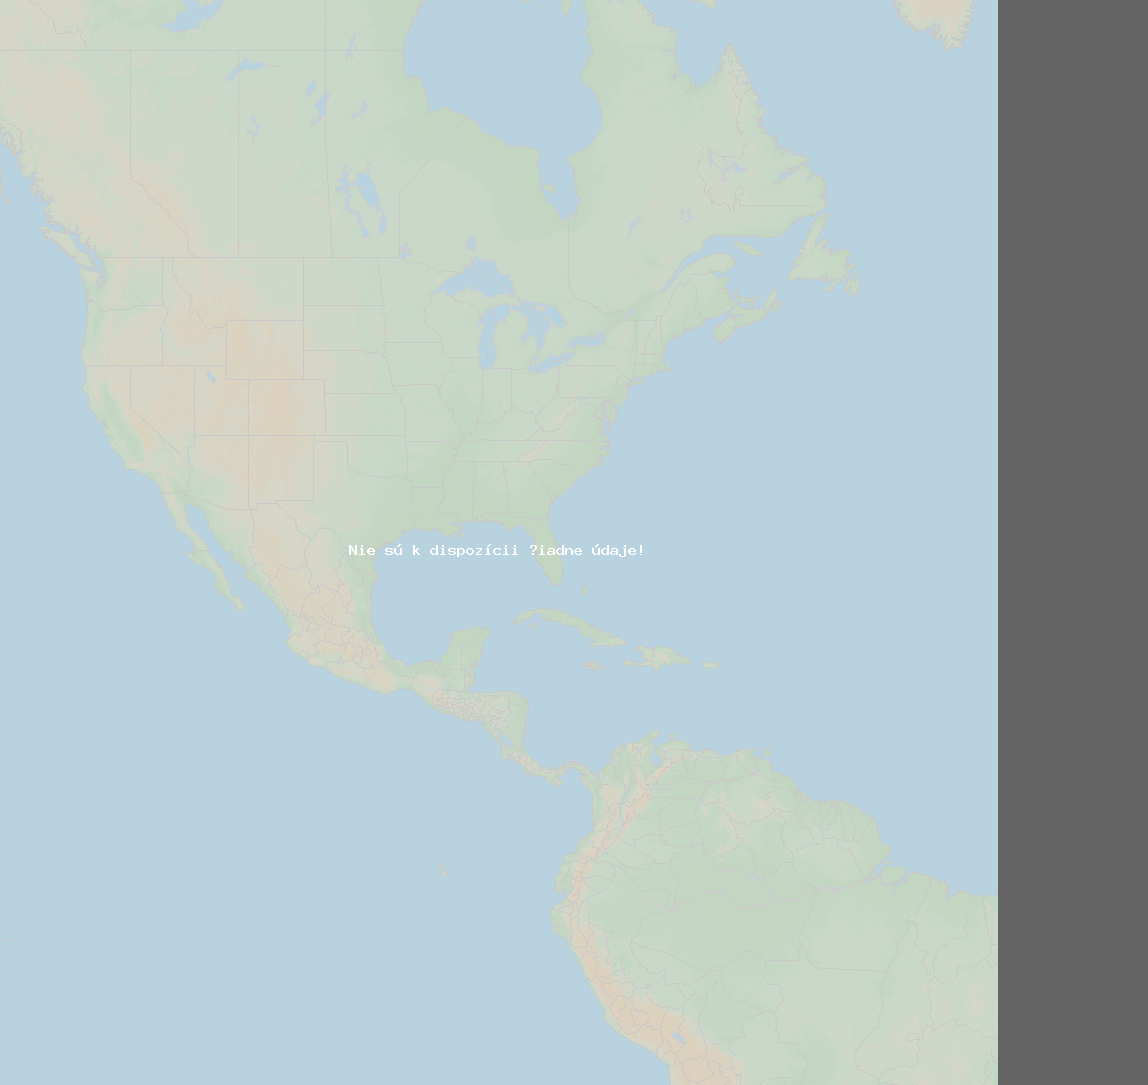 Pomer bleskov (Stanica Carpy) North America 2024 